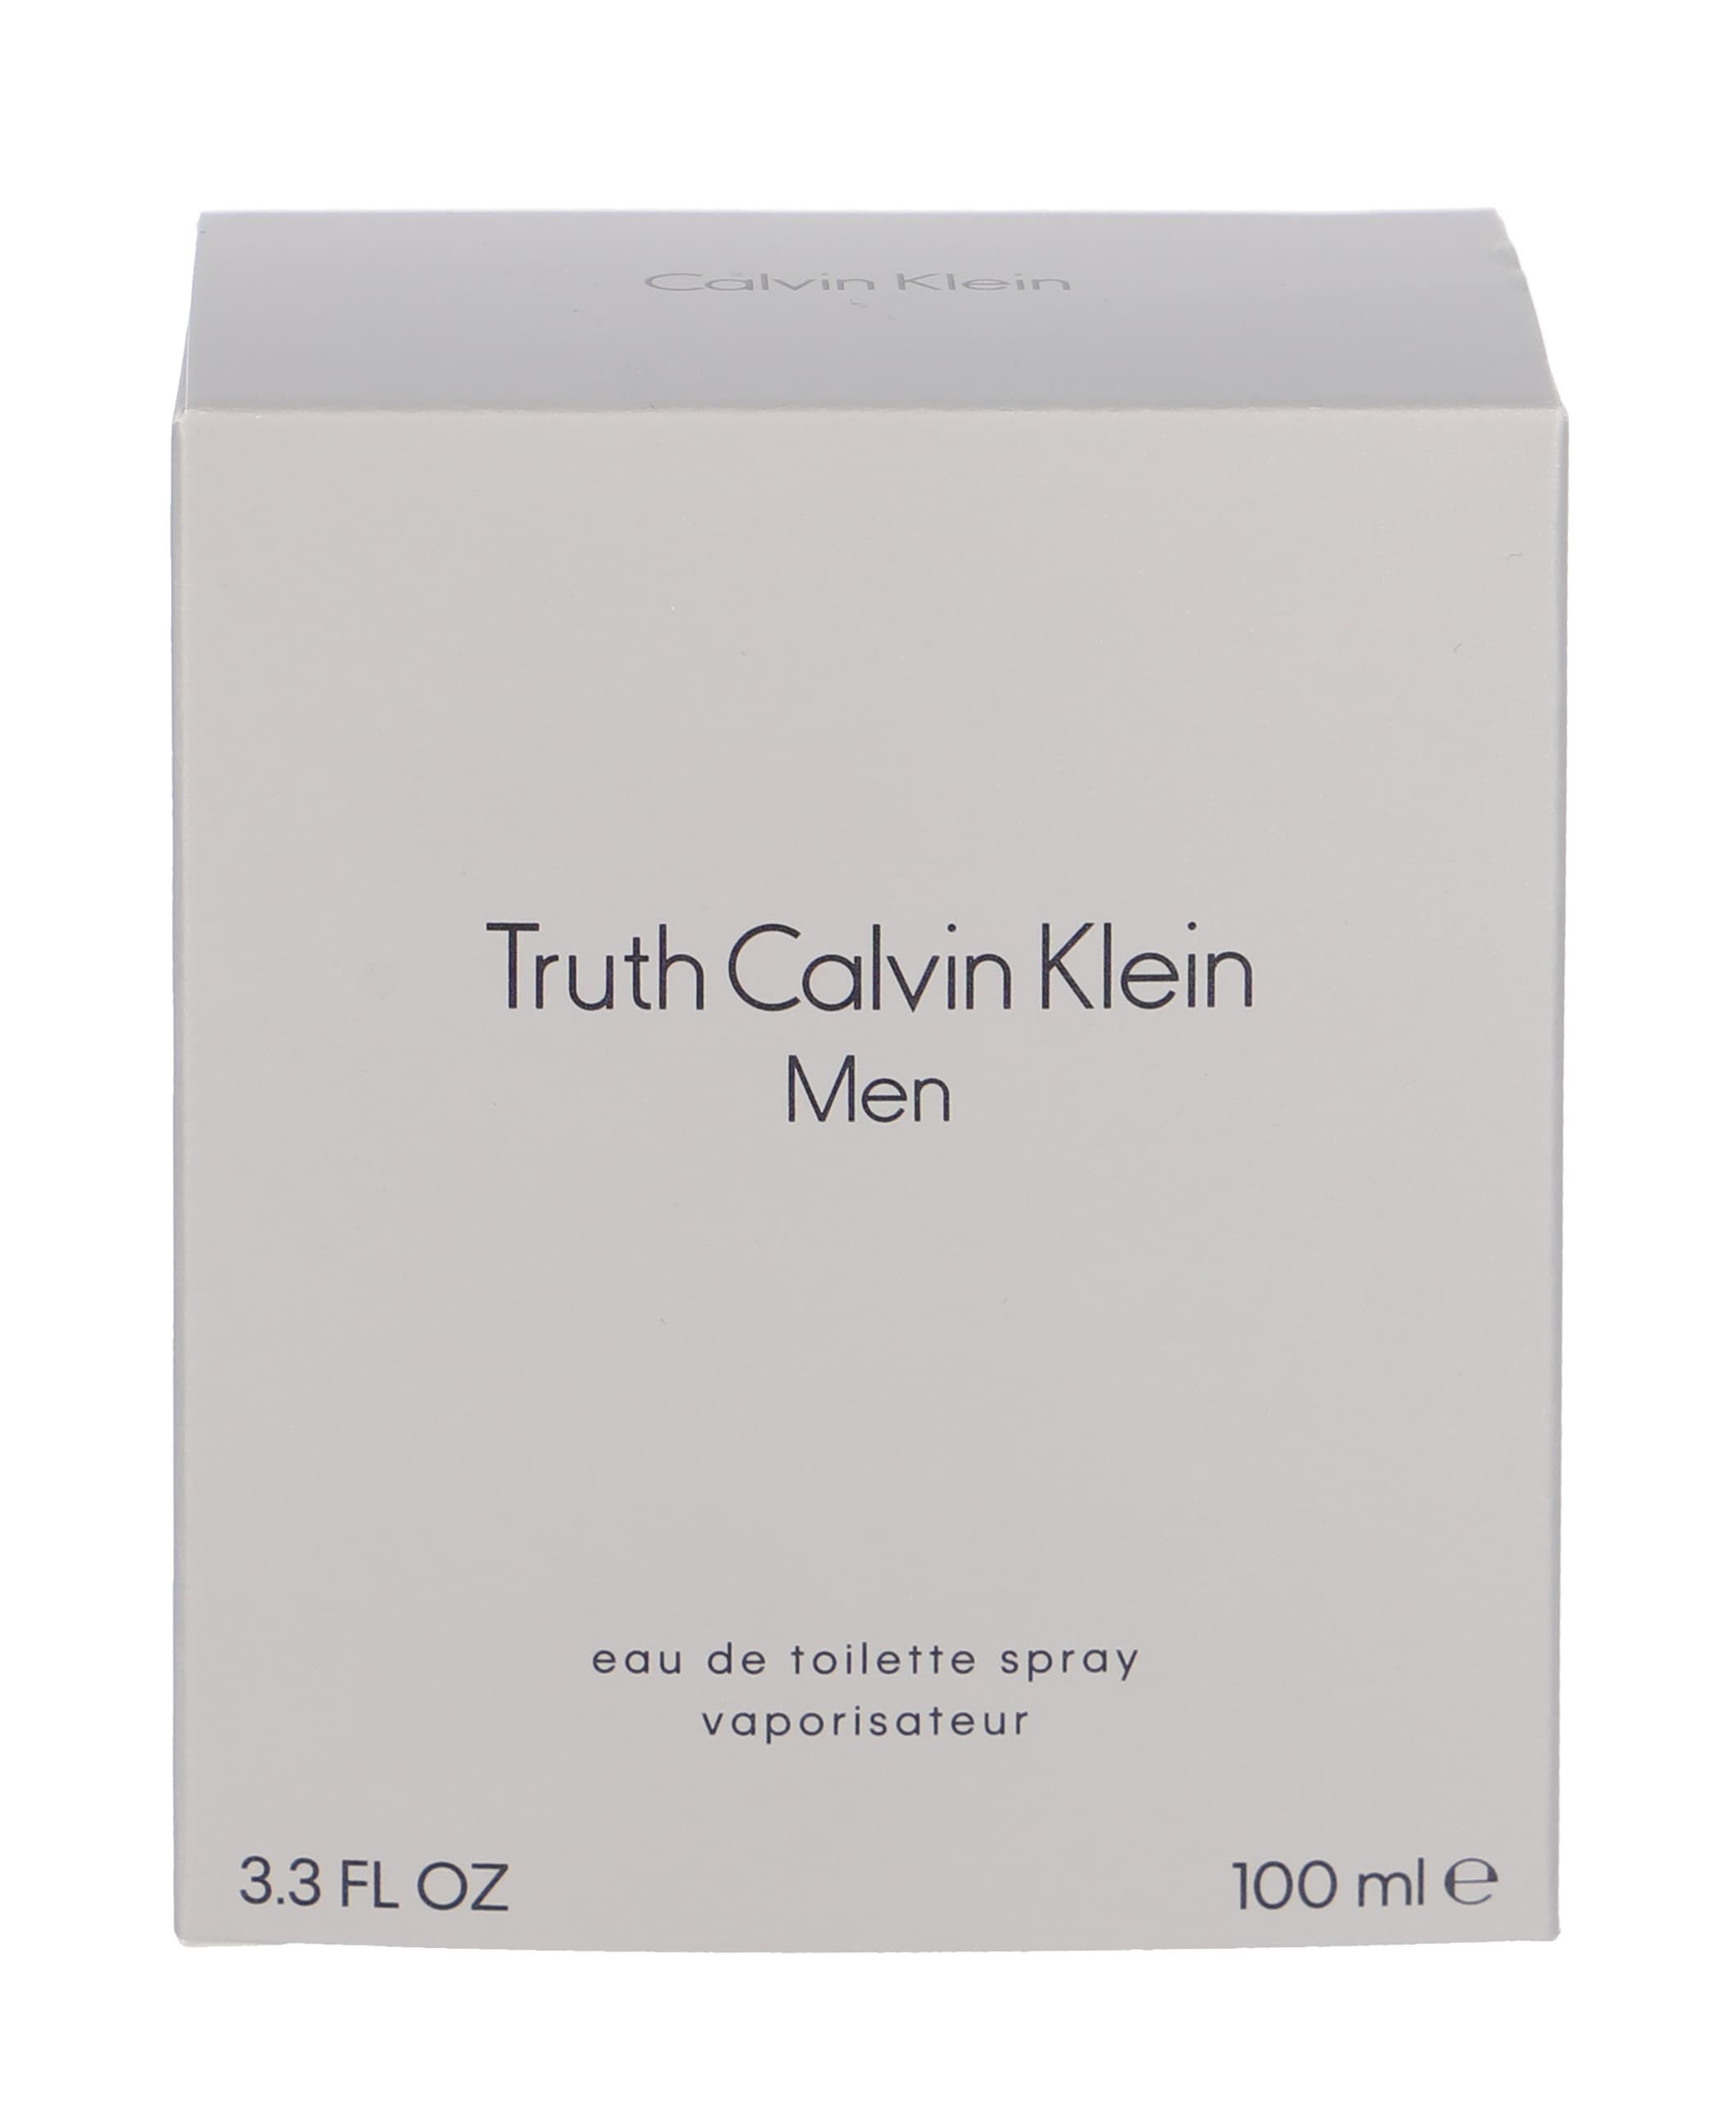 Calvin Klein Toilette online »Truth kaufen Eau Men« de